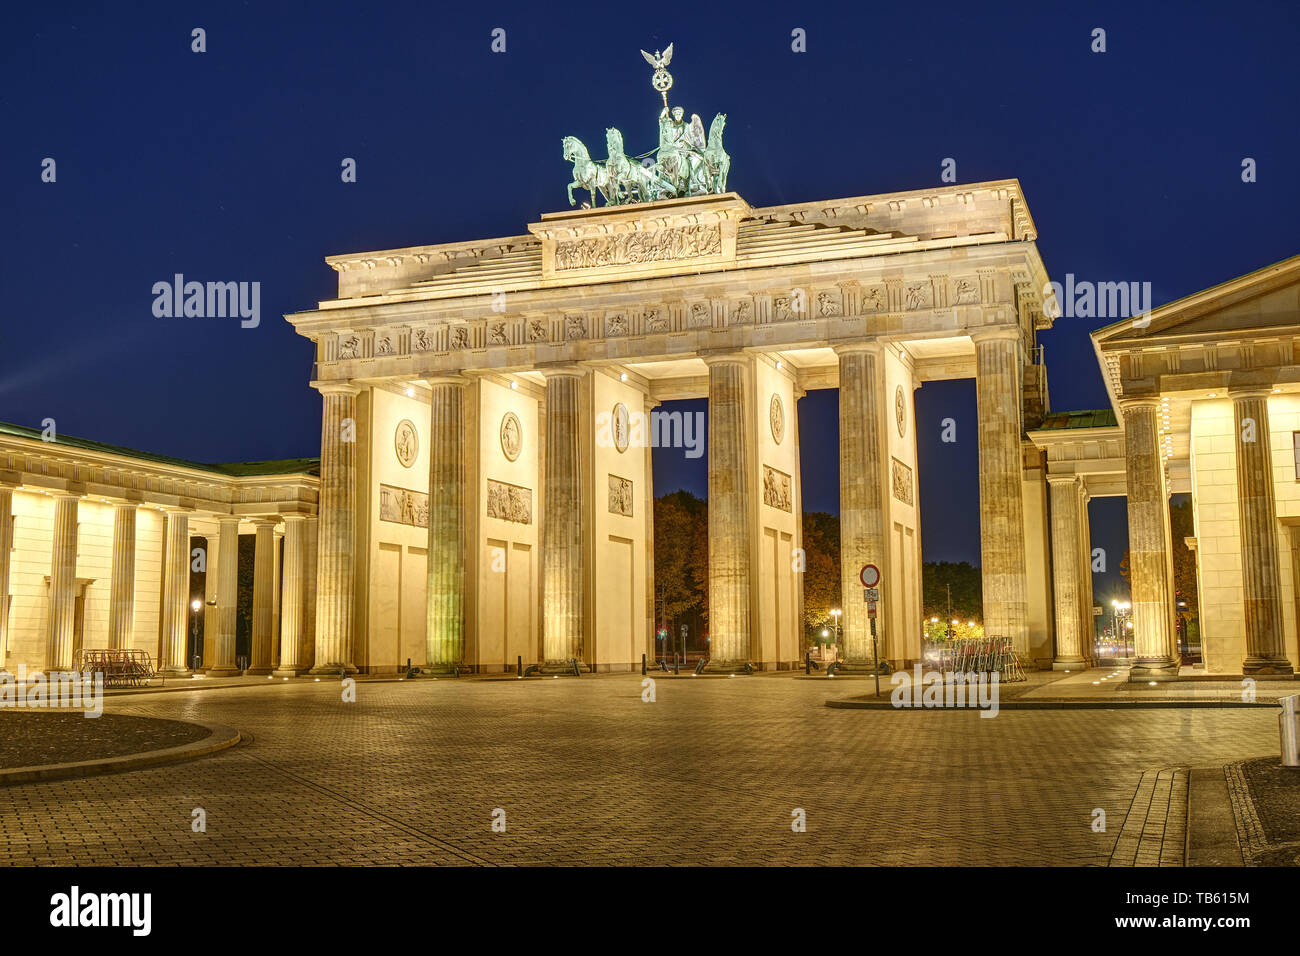 The famous Brandenburg Gate in Berlin illuminated at night Stock Photo